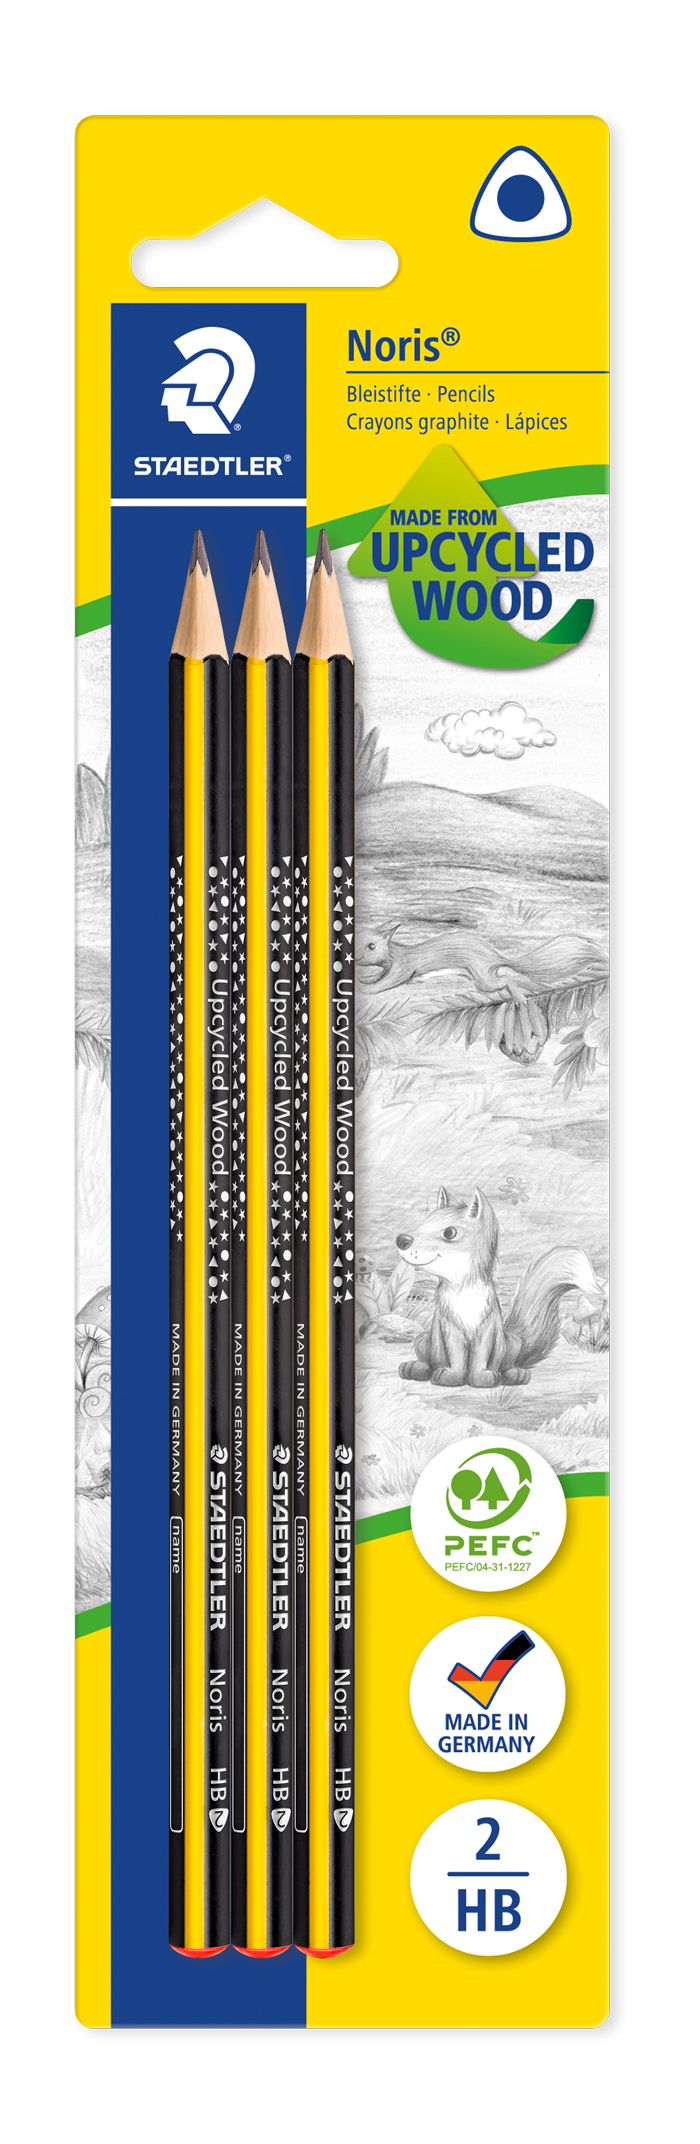 STAEDTLER® Bleistifte Noris® HB Upcycled Wood 3 Stück